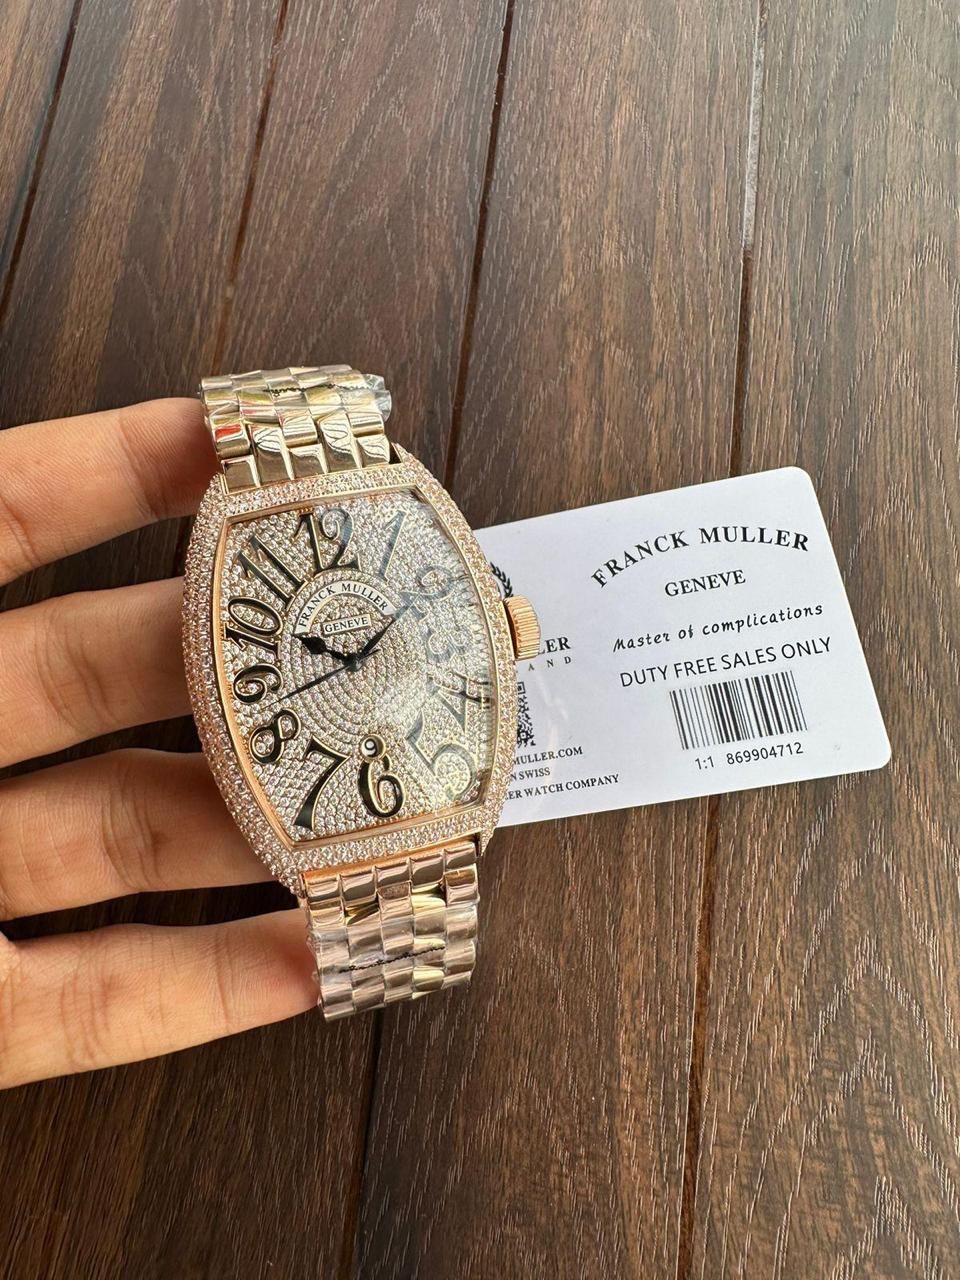 Frank Muller Men’s watch